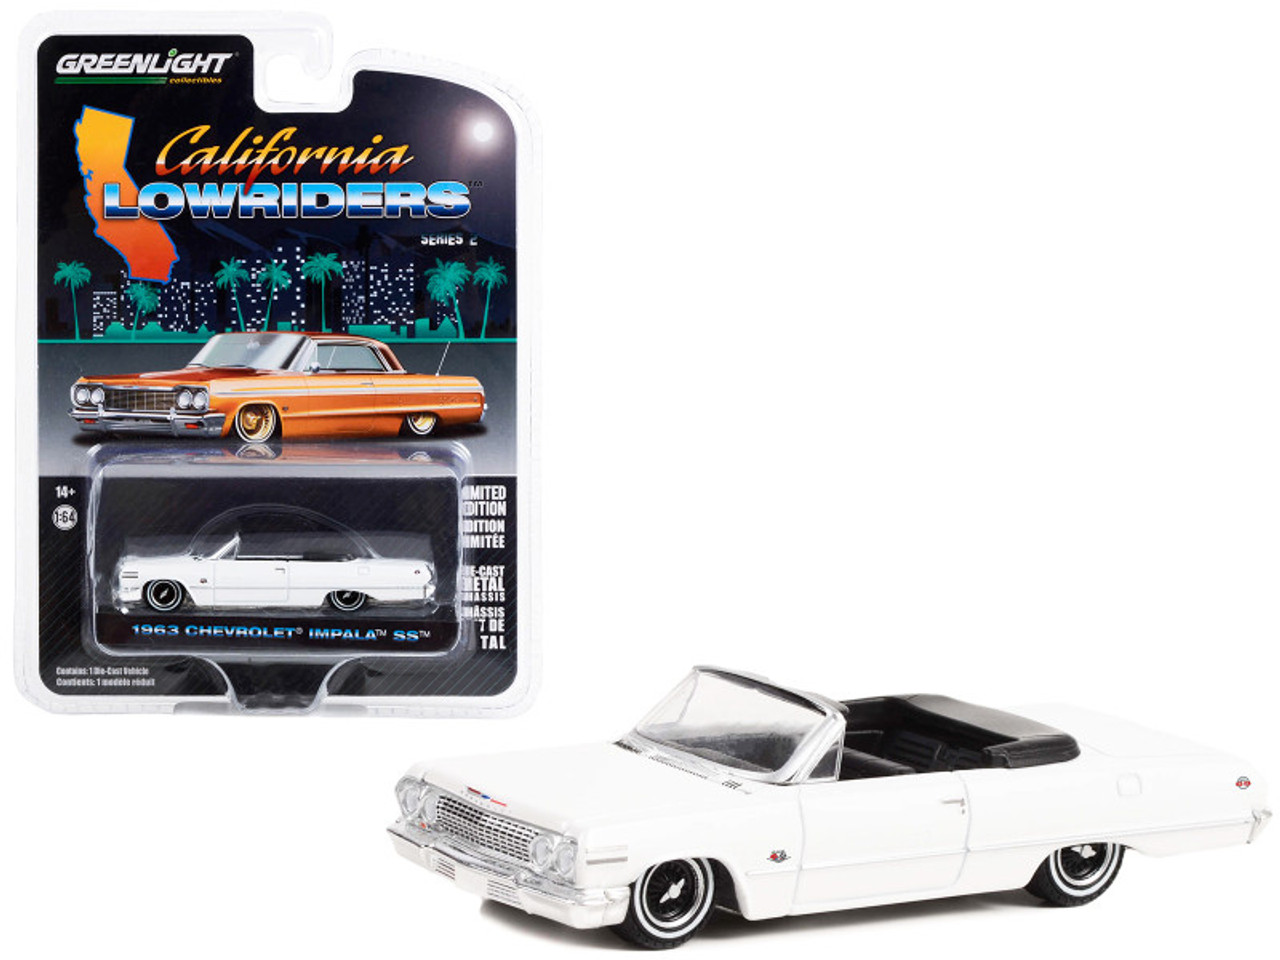 1/64 Greenlight 1963 Chevrolet Impala SS Convertible White "California Lowriders" Series 2 Diecast Car Model